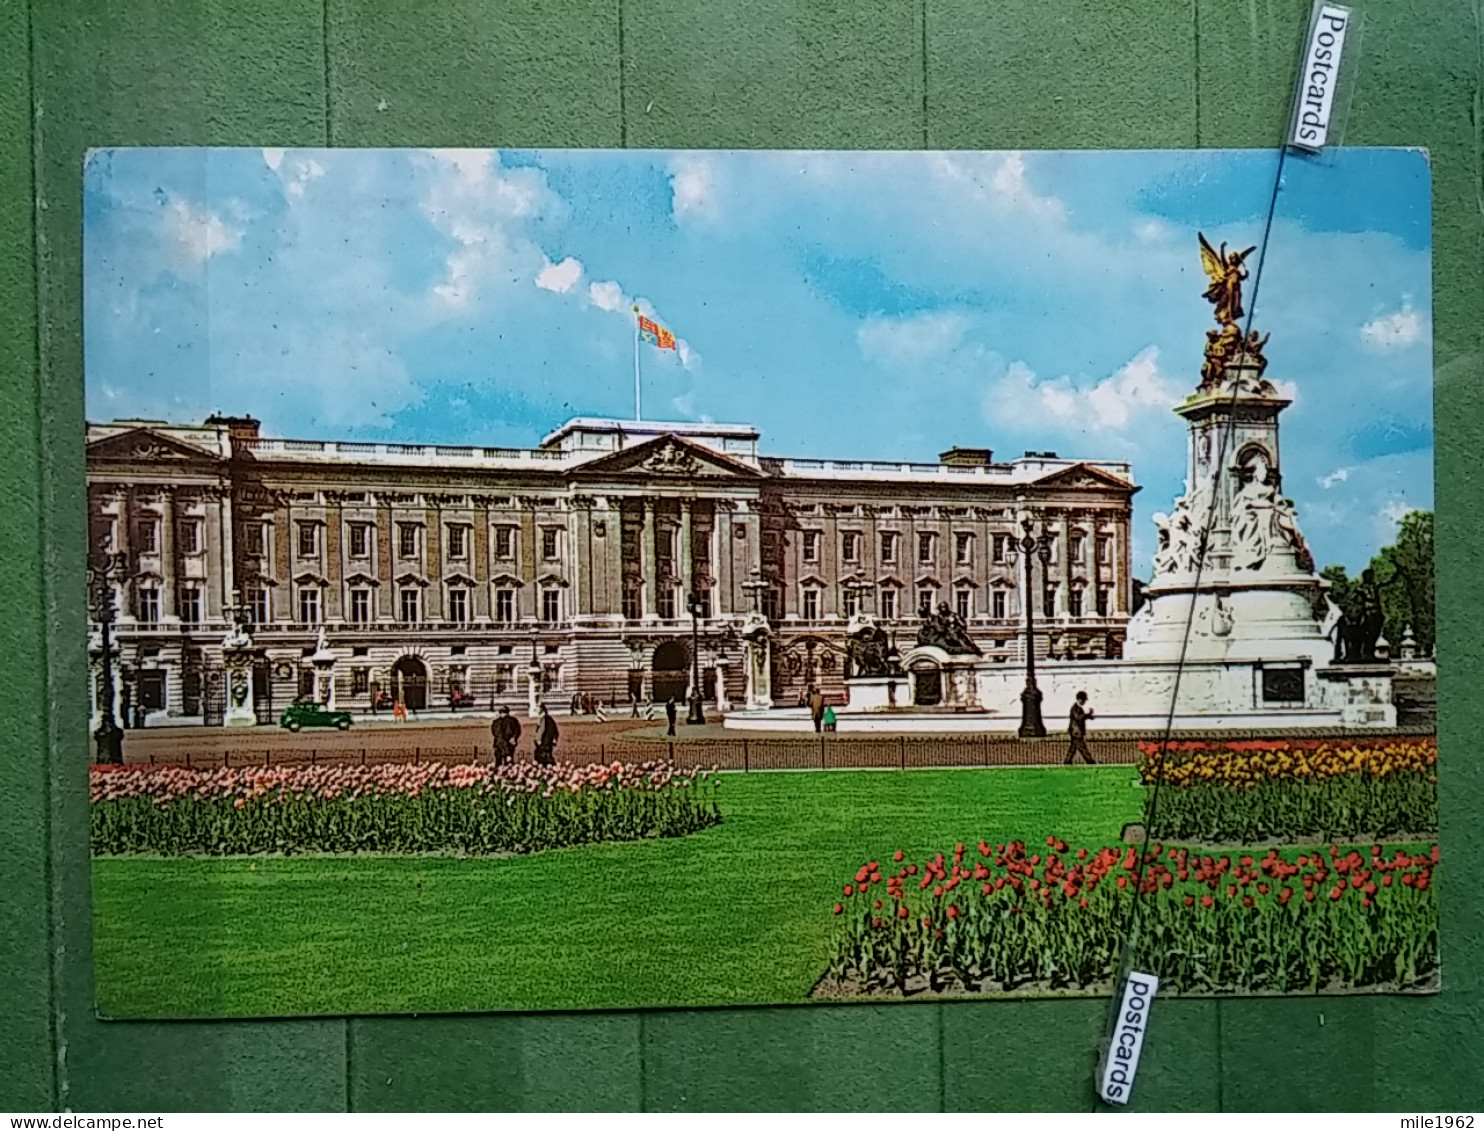 KOV 540-42 - LONDON, England, - Buckingham Palace